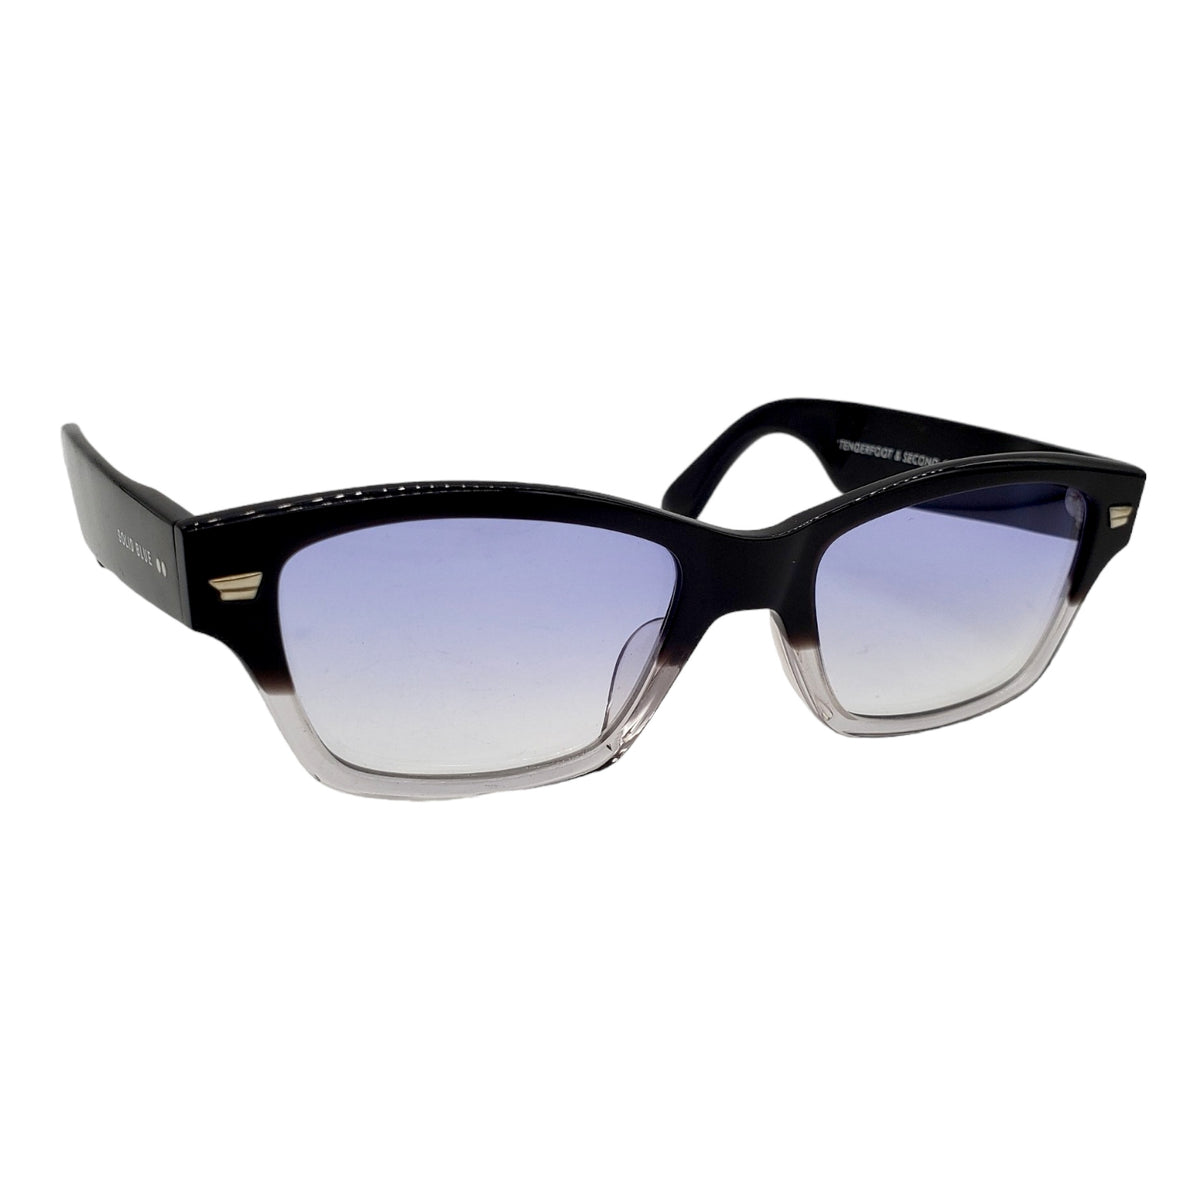 Garbstore X Solid Blue Ombre Lens Sunglasses